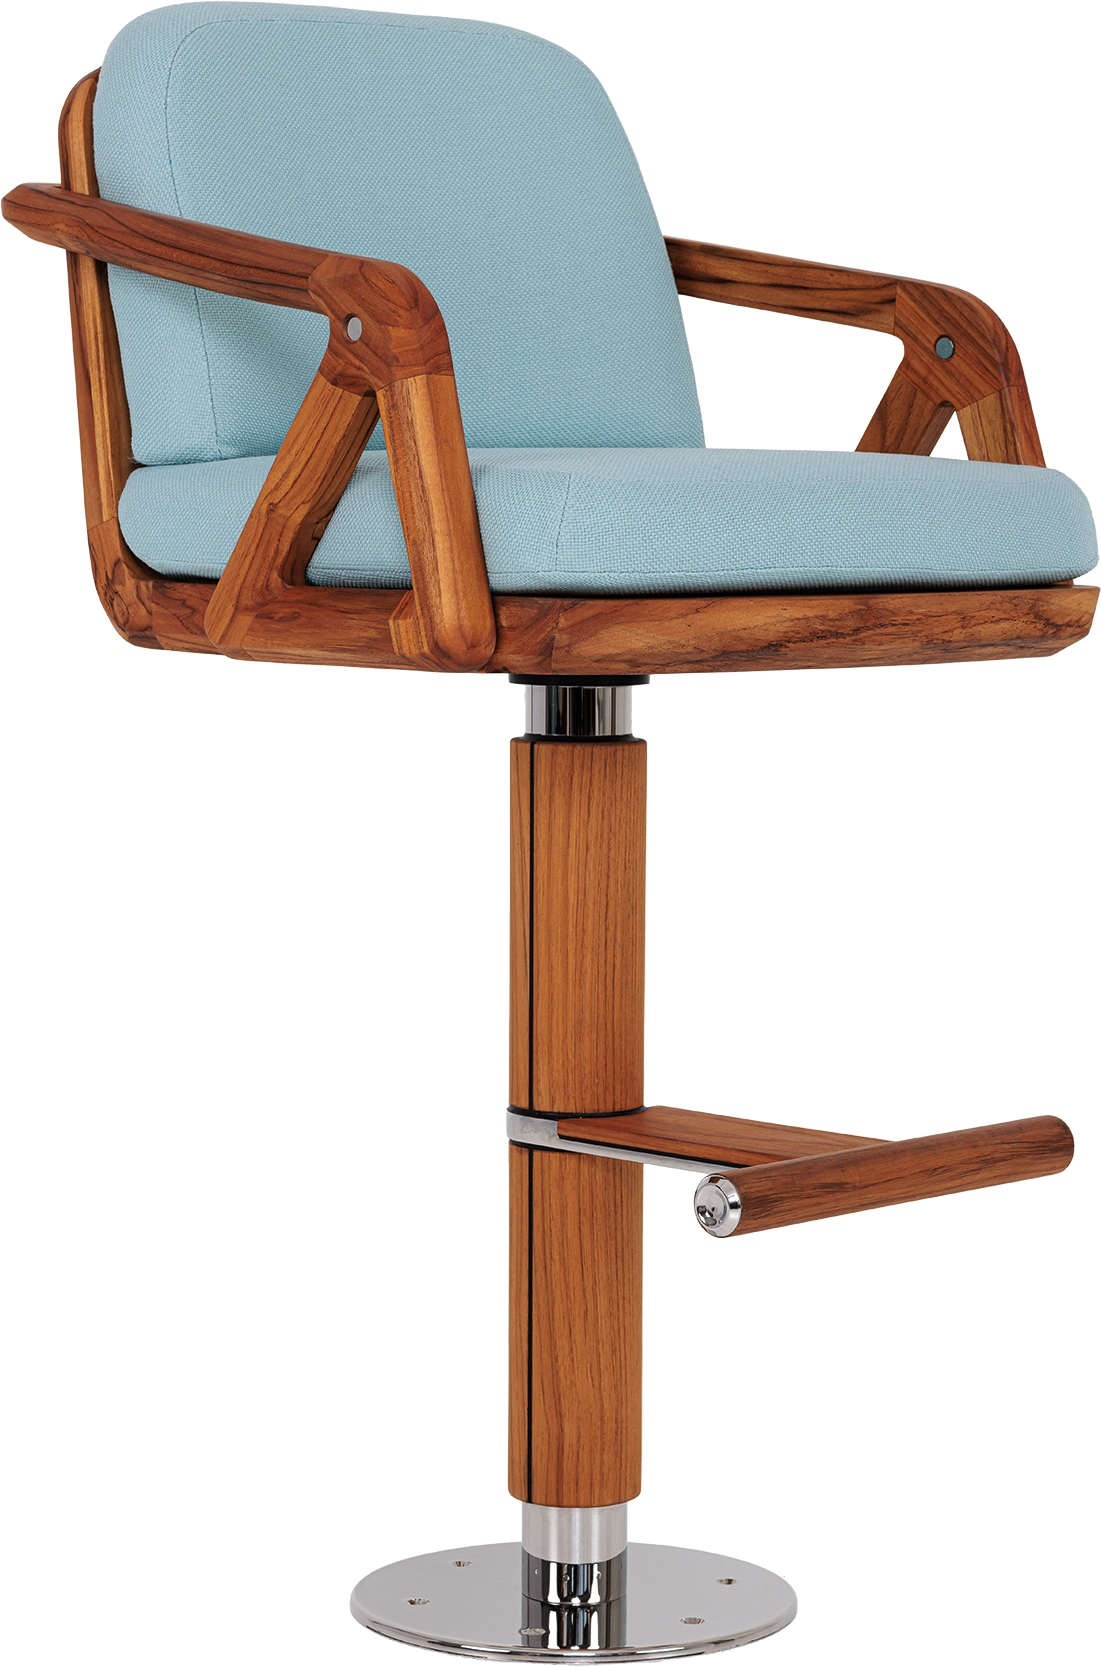 Riviera bar stool, designed by Espen Oeino